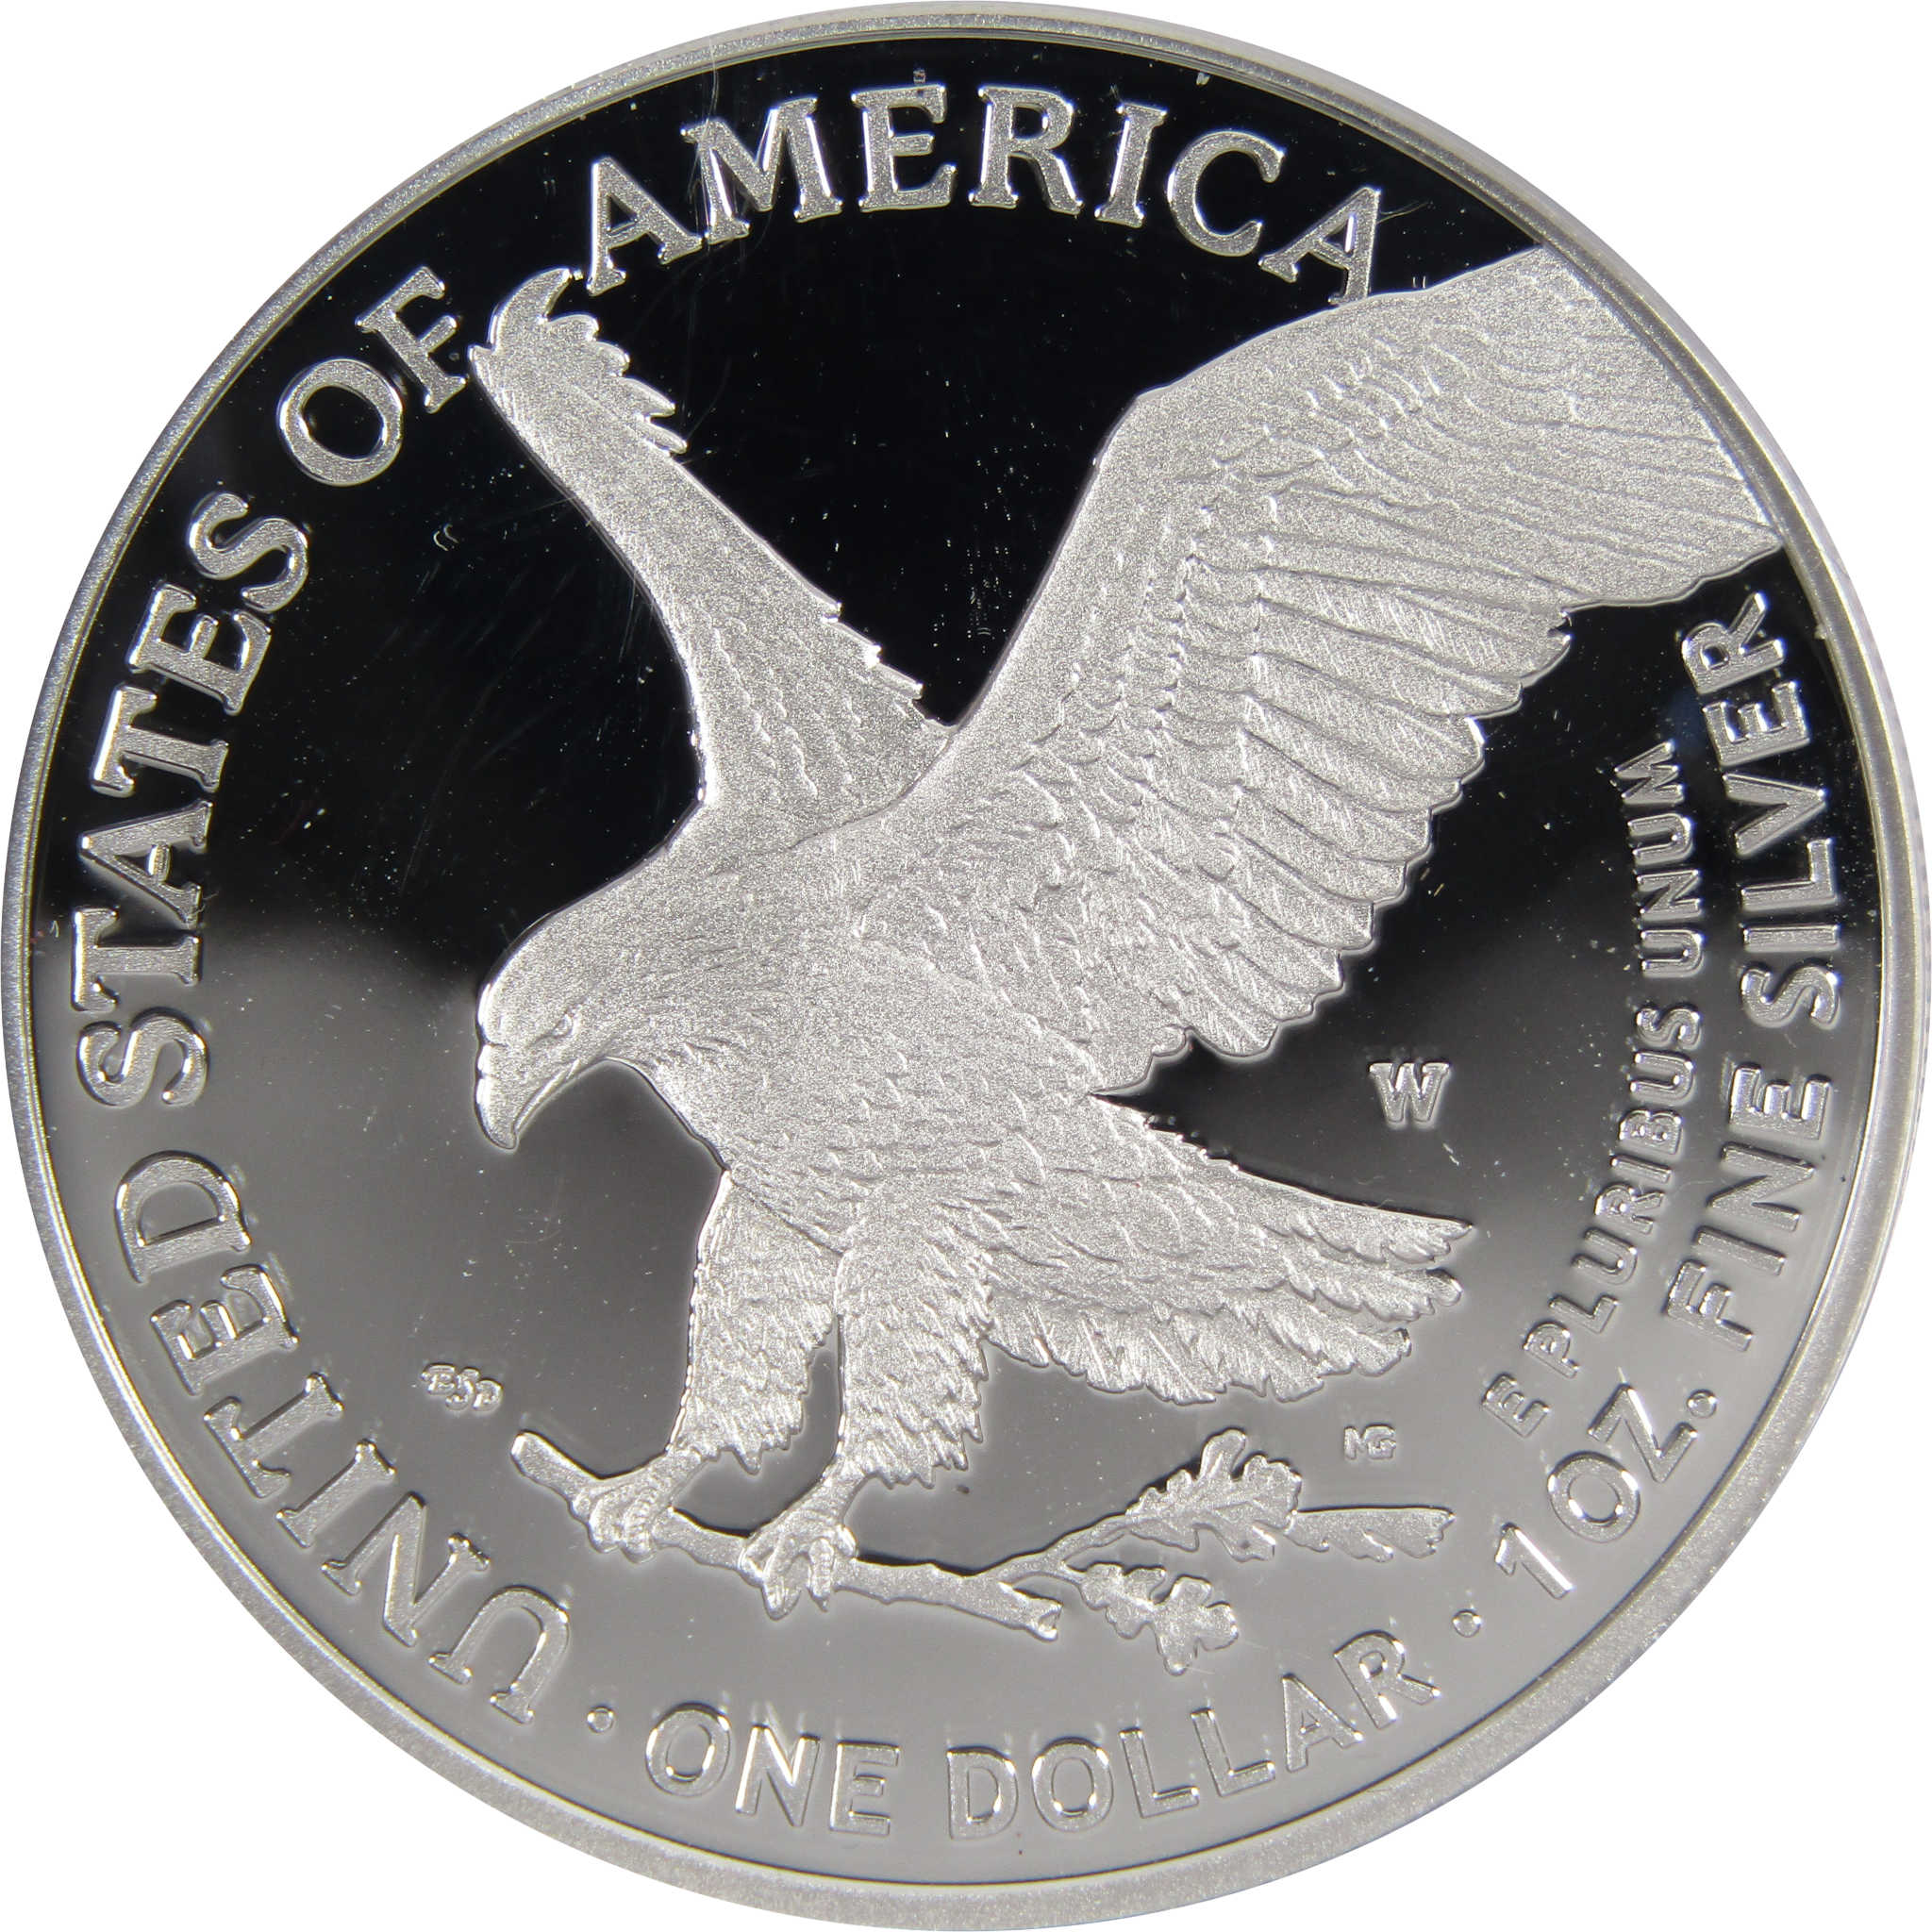 2022 W American Silver Eagle PR 70 DCAM ANACS $1 First Day SKU:CPC3441